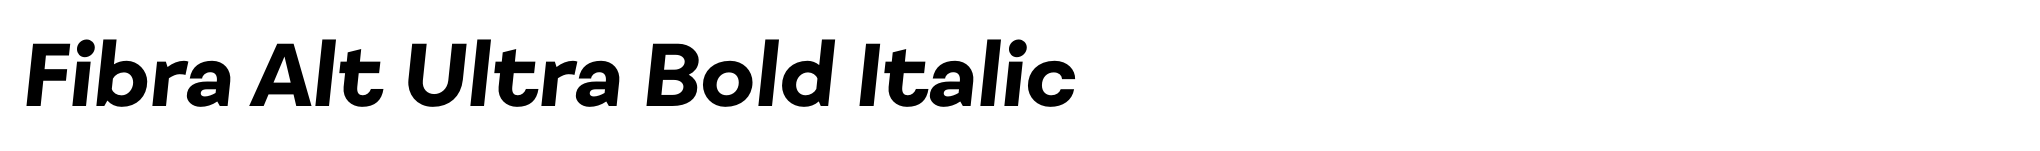 Fibra Alt Ultra Bold Italic image